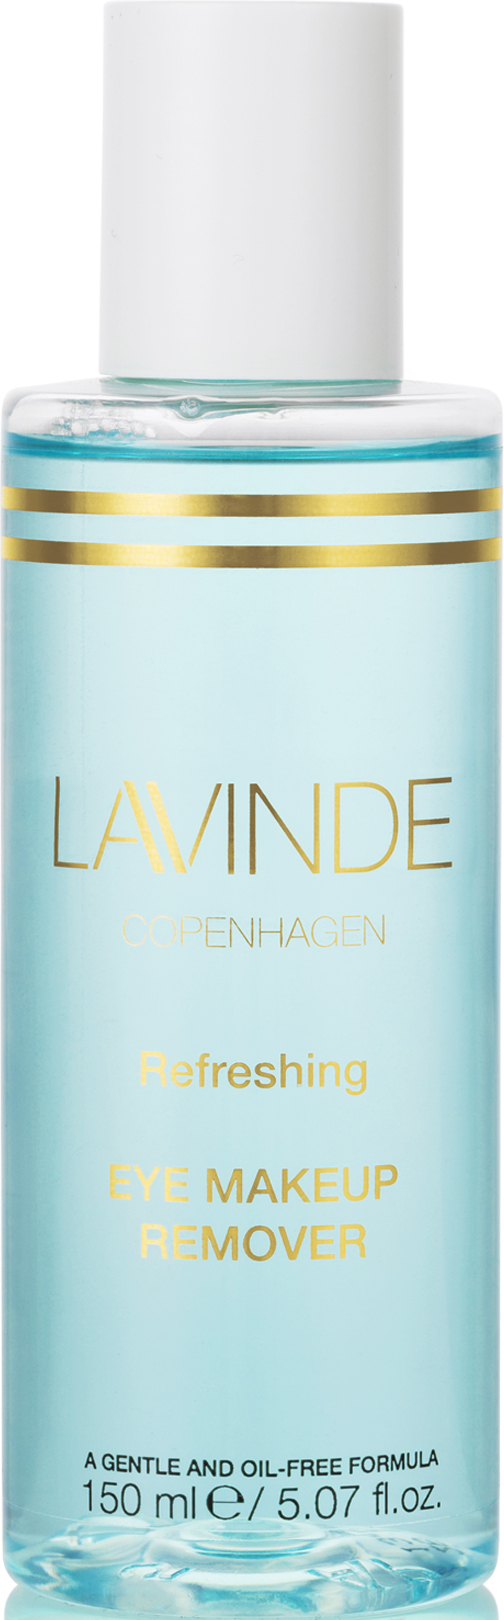 Par Intim Hyret Lavinde Copenhagen REFRESHING - Eye Makeup Remover 150 ml | lyko.com